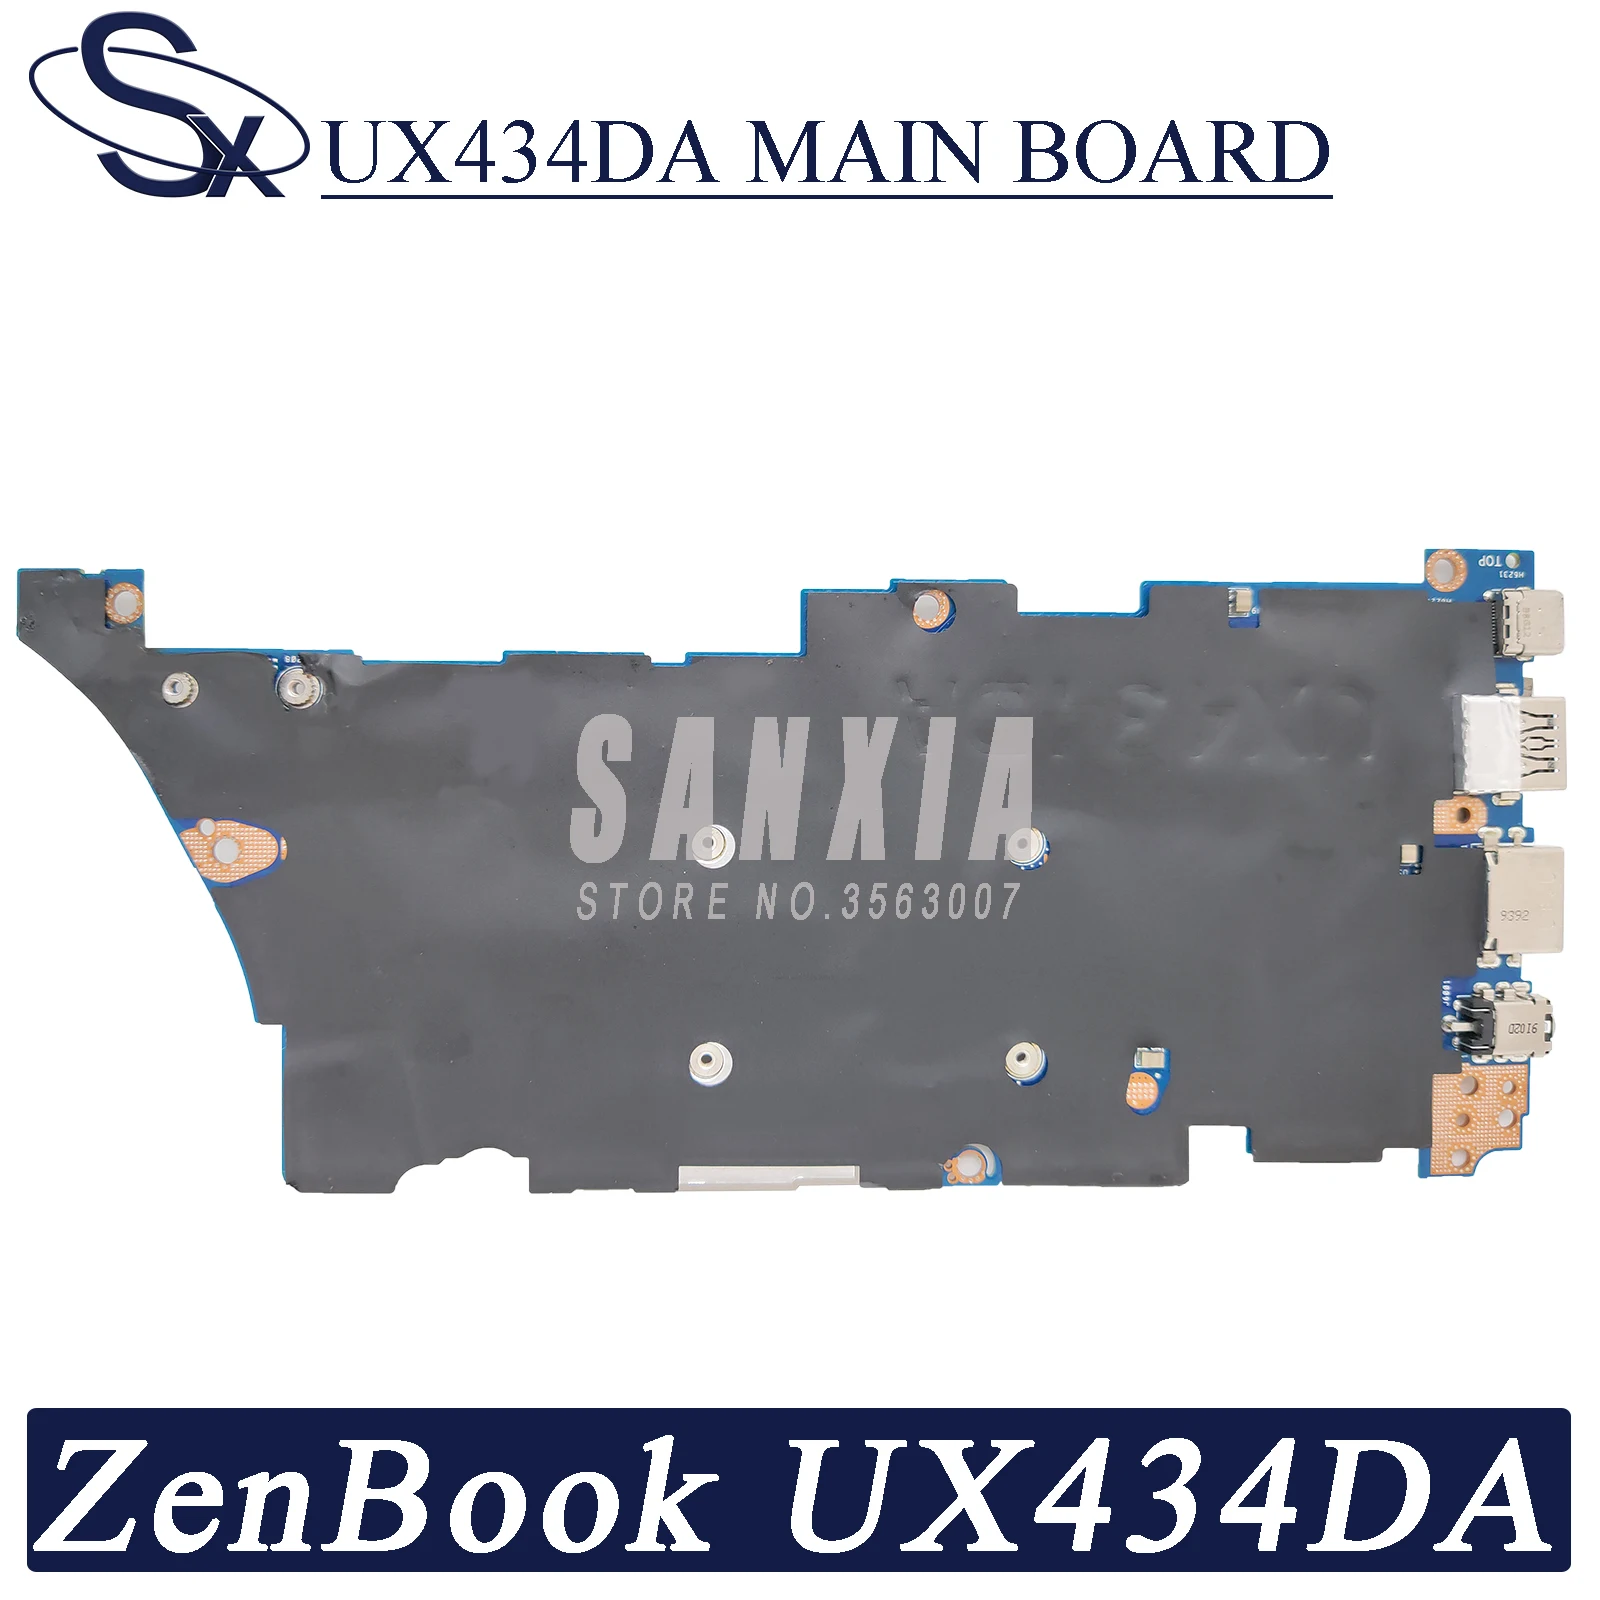 kefu ux434da laptop motherboard for asus zenbook ux434da ux434d original mainboard 8gb ram r5 3500u free global shipping